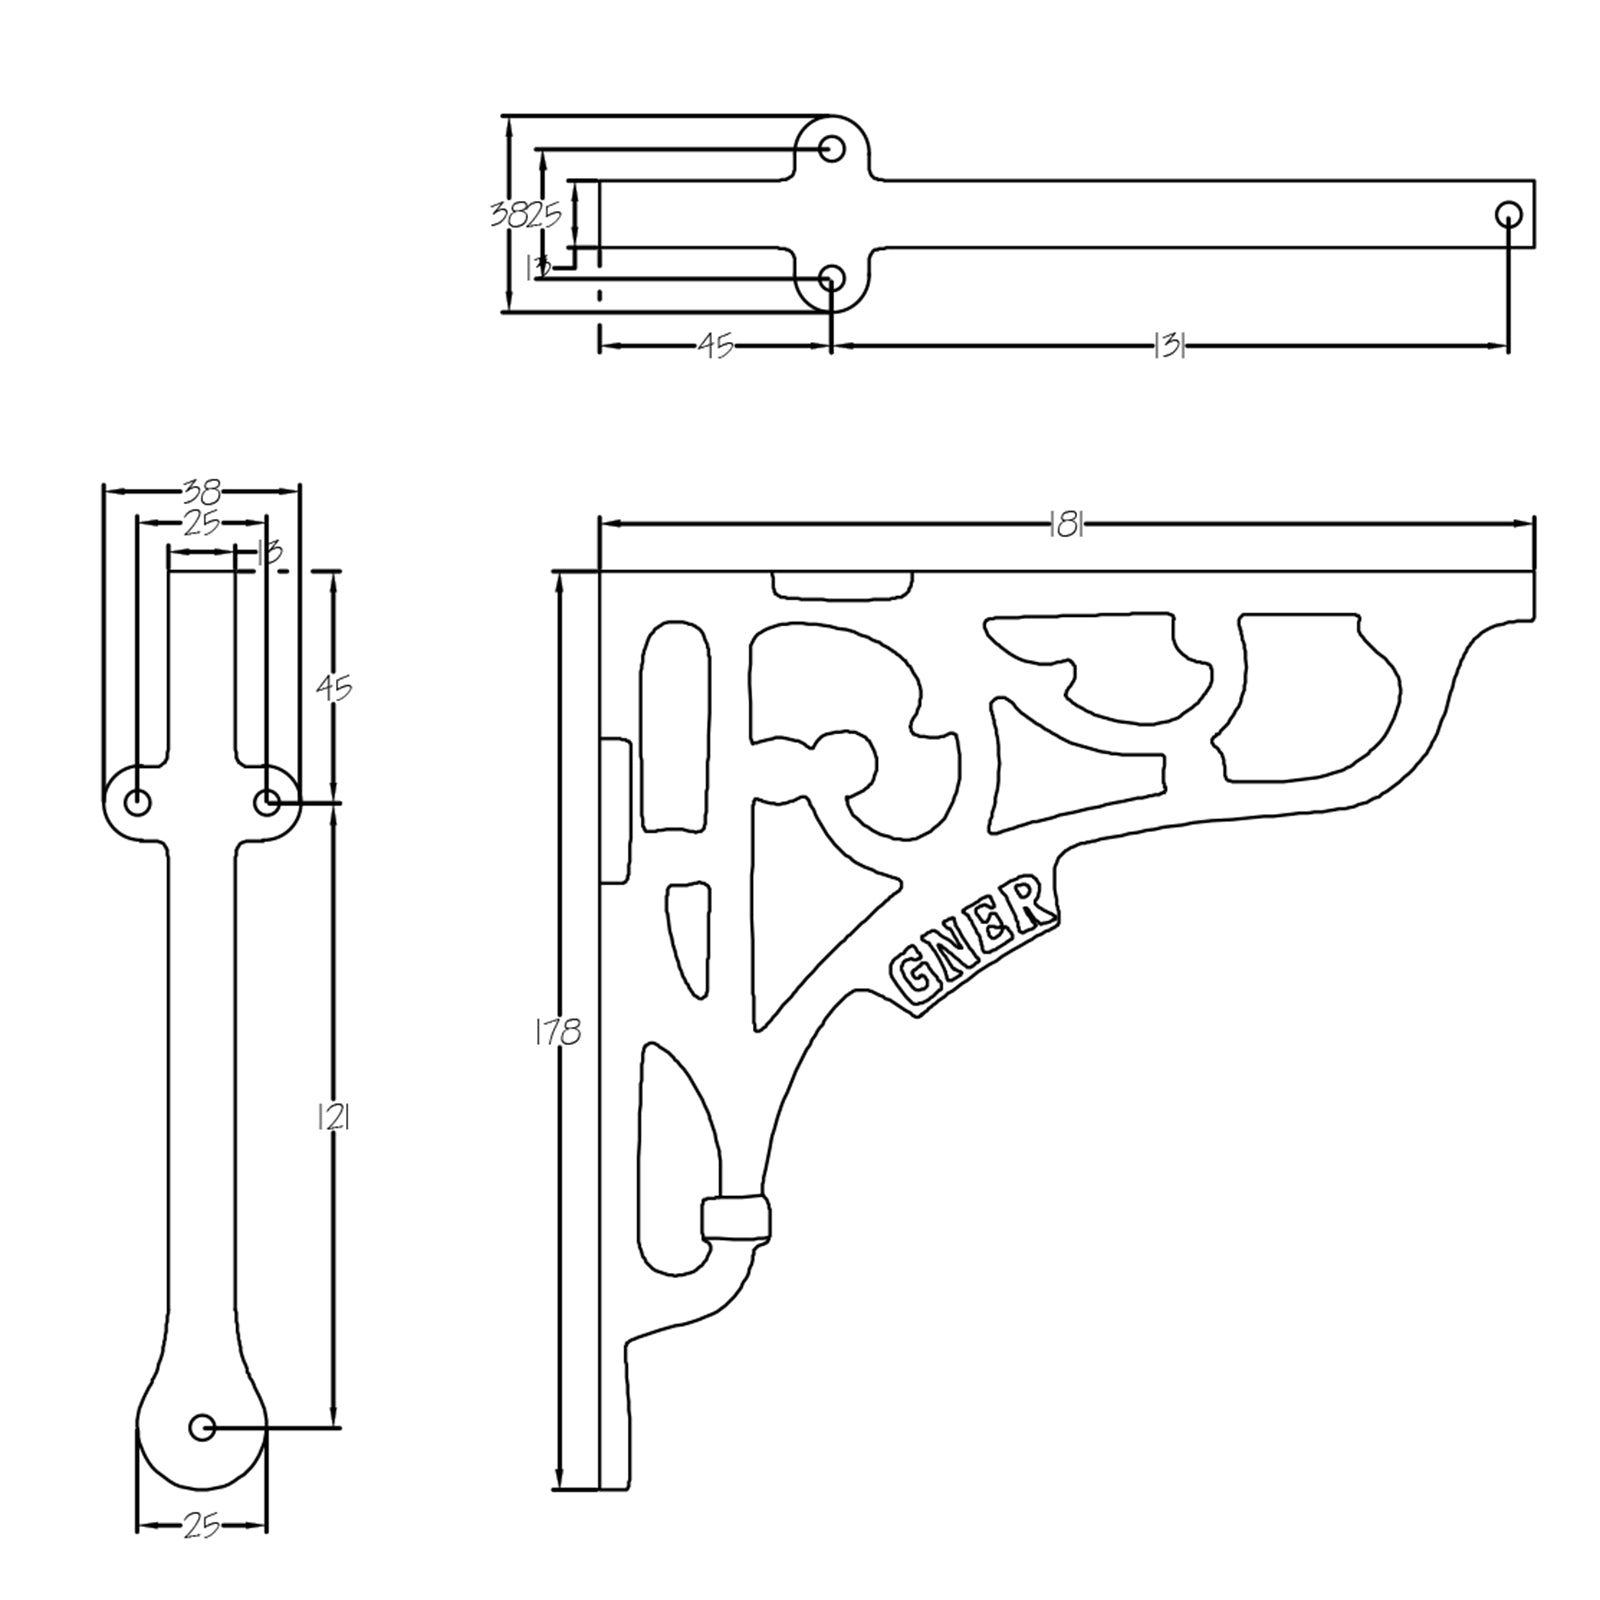 Dimension drawing of 7 inch GNER shelf bracket SHOW